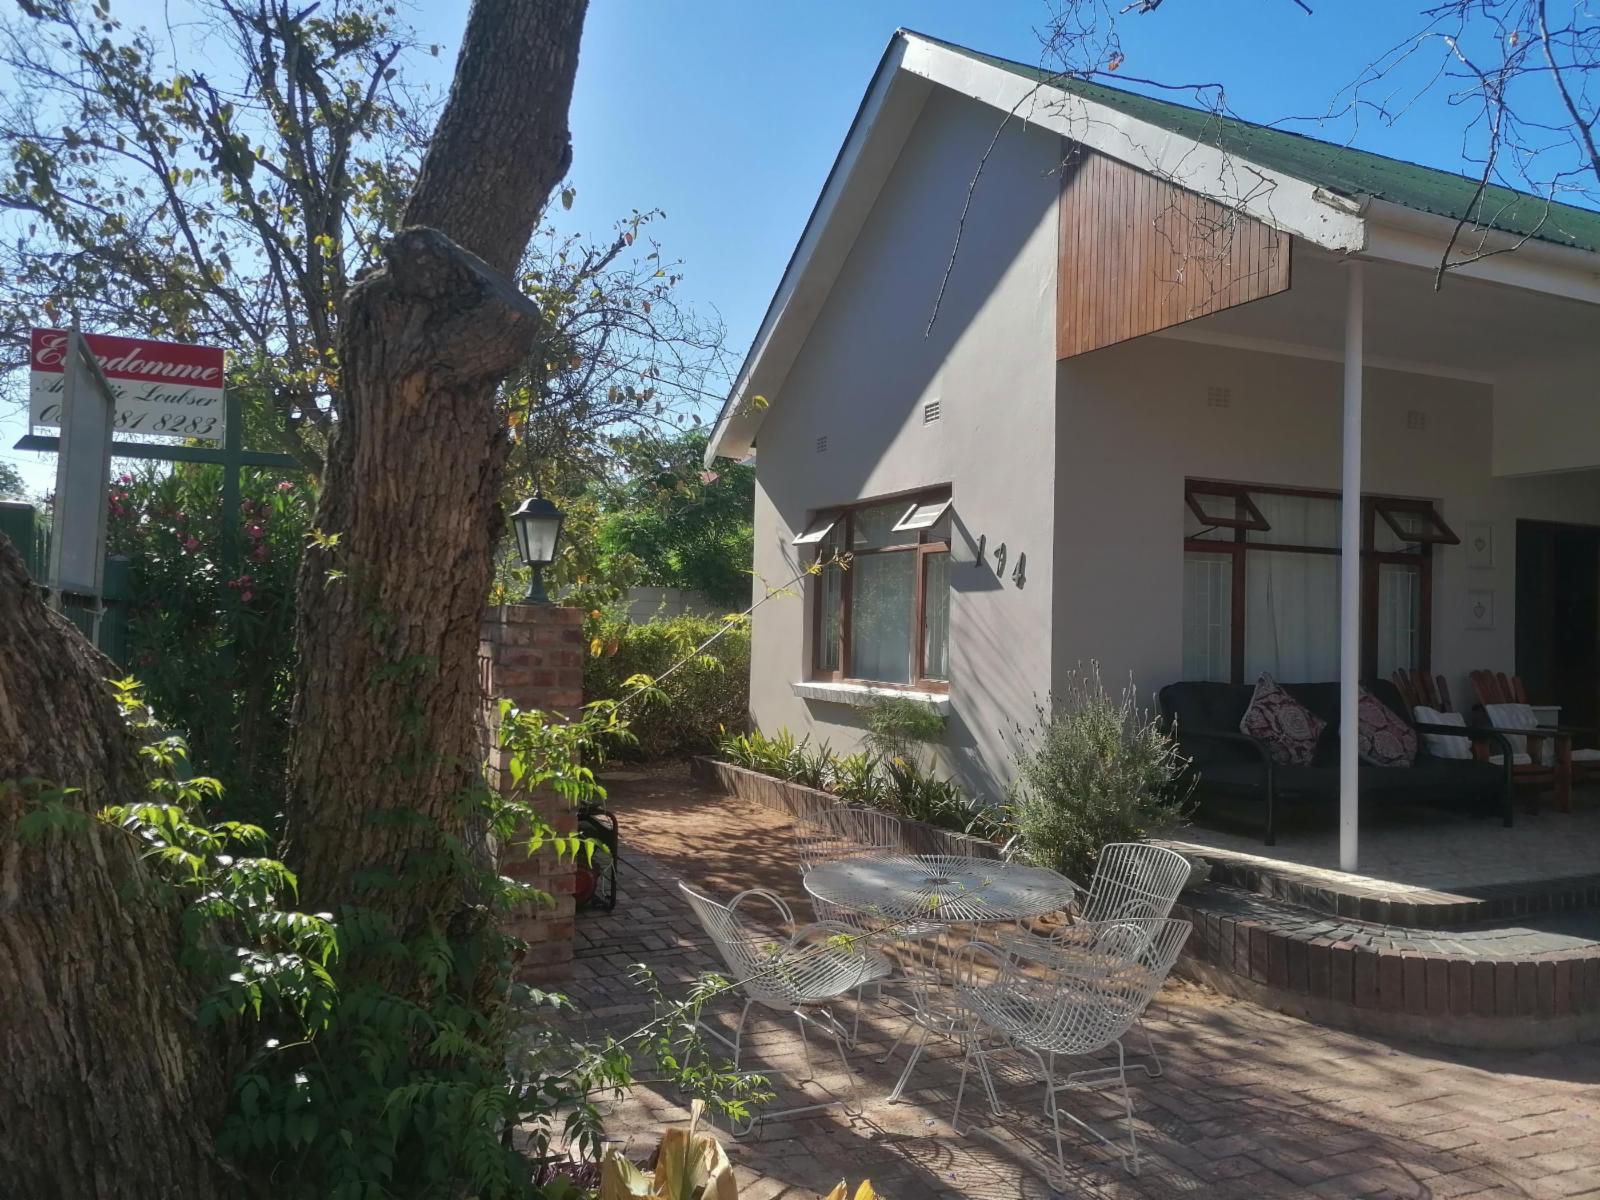 Villa De Karoo Guest House Oudtshoorn Western Cape South Africa House, Building, Architecture